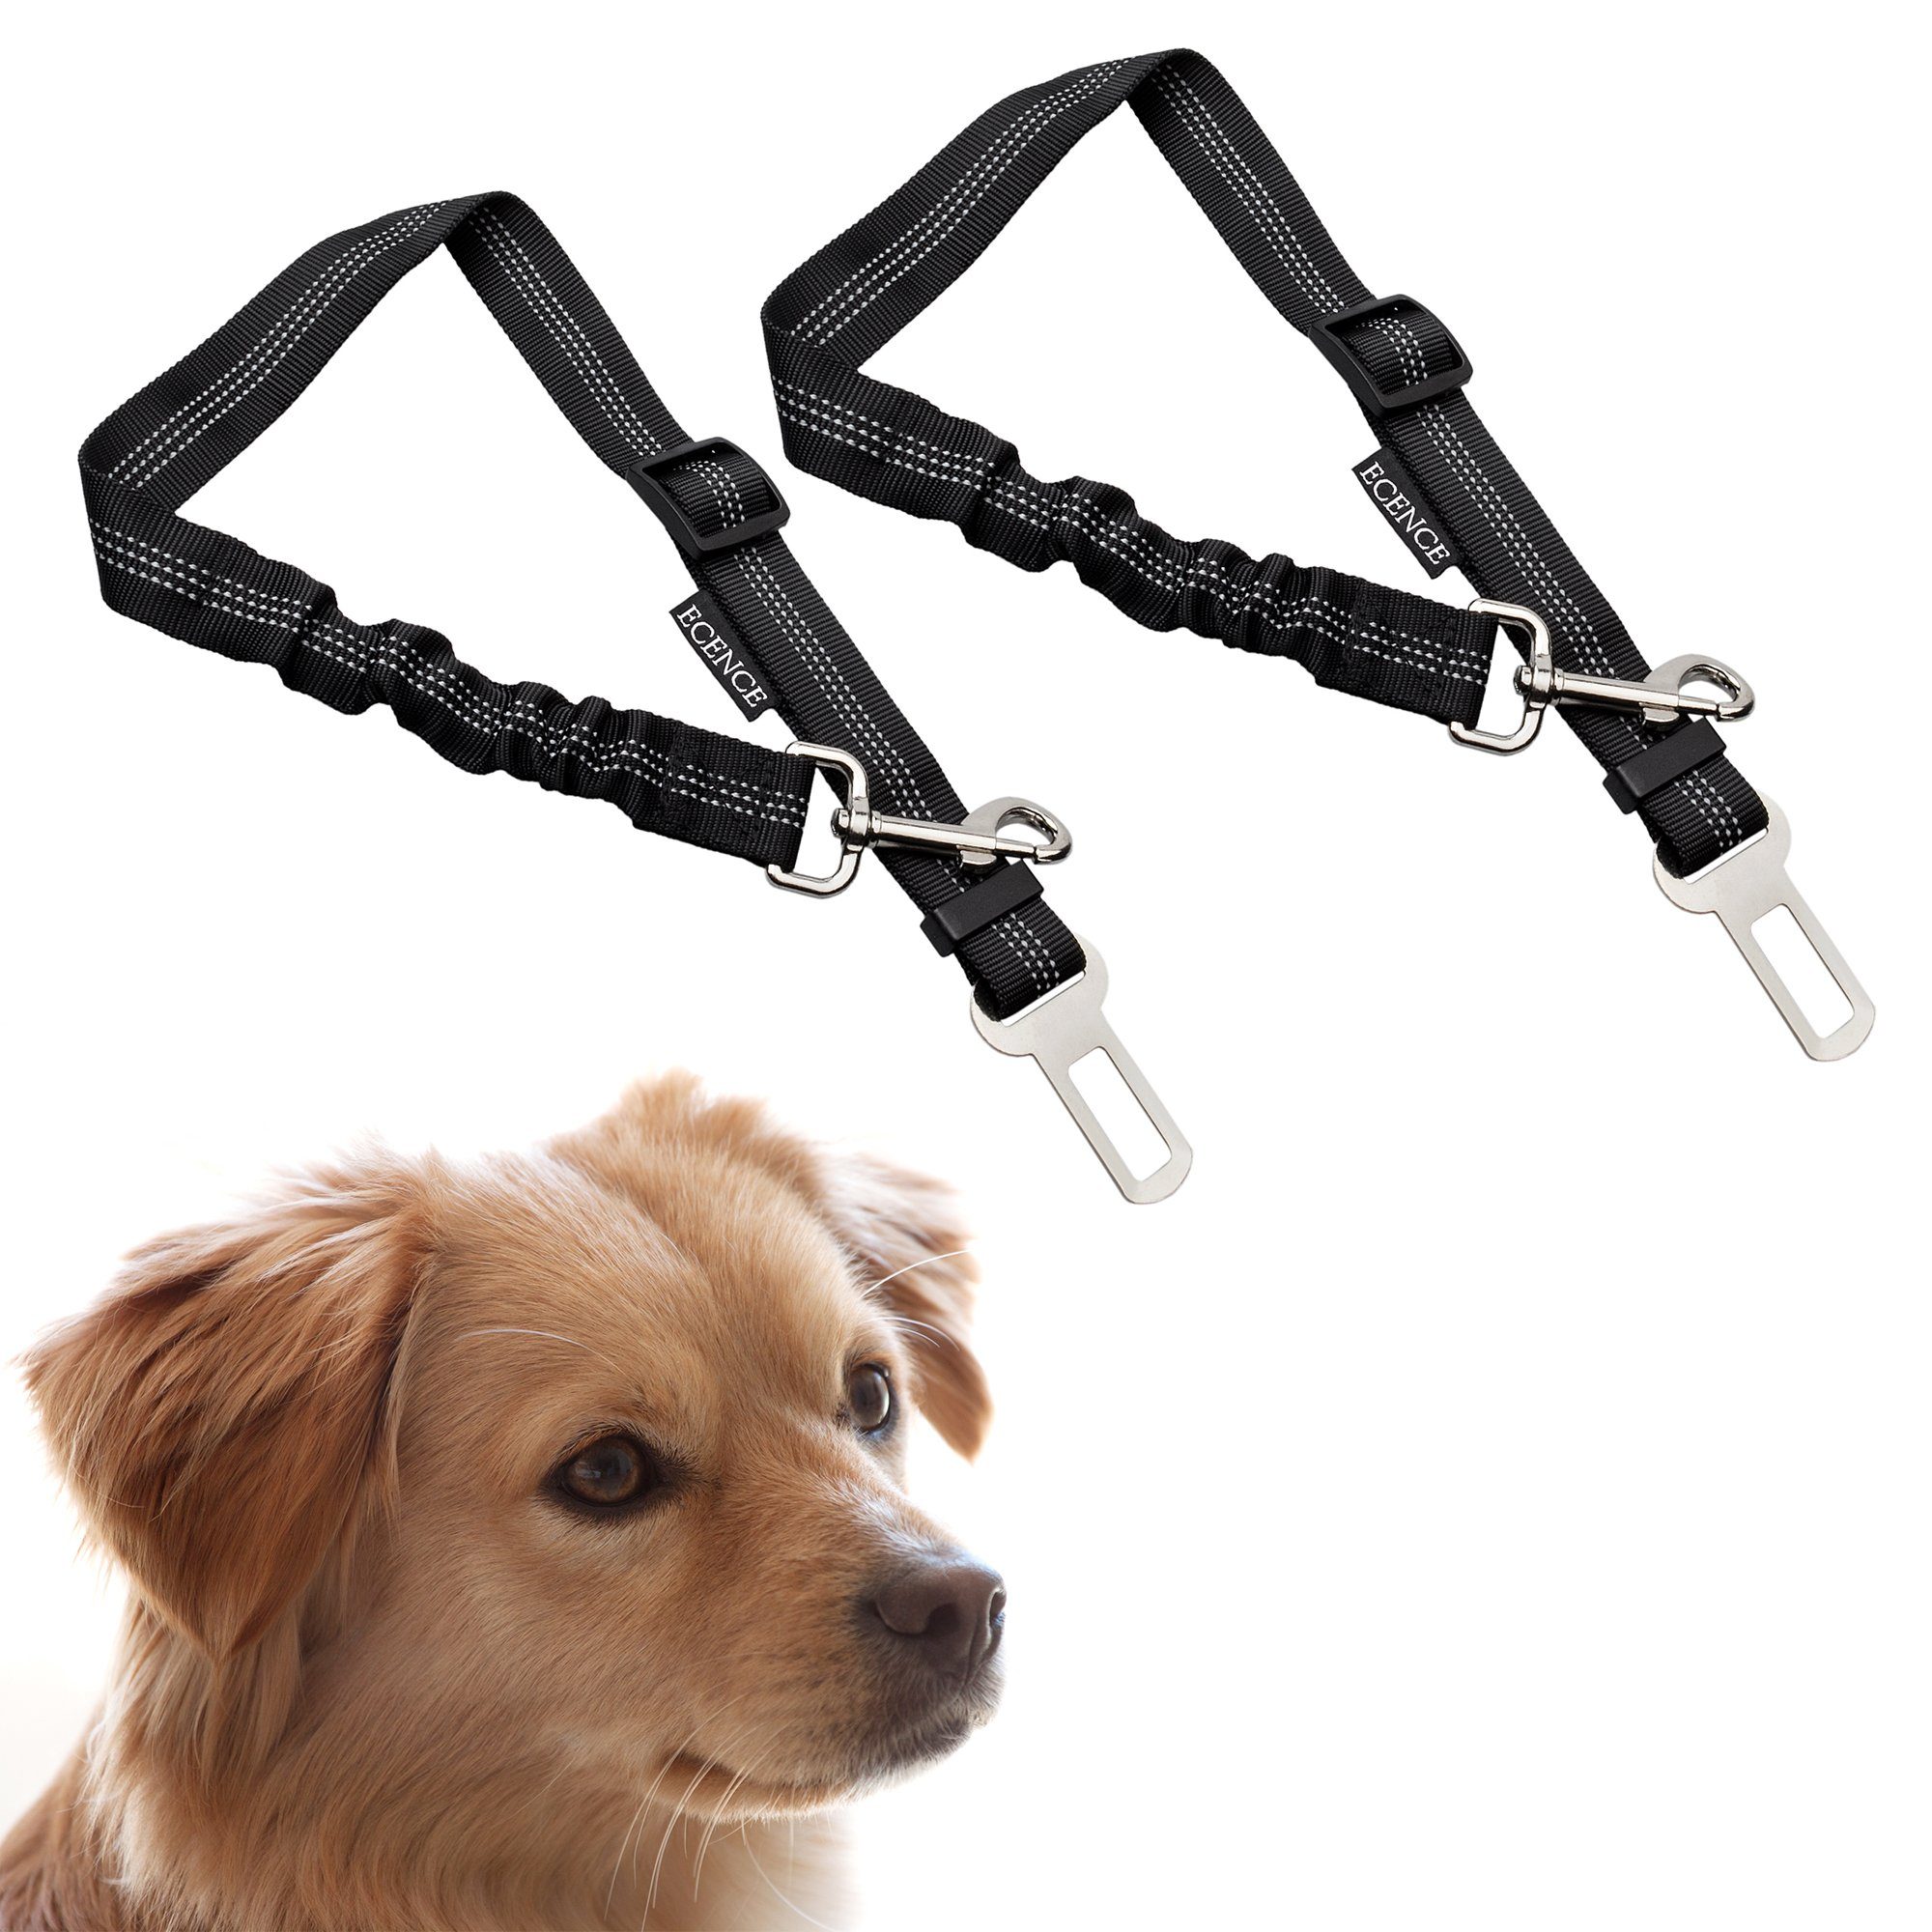 ECENCE Autohundegeschirr 2x Hunde-Gurt Auto Sicherheitsgurt elastisch